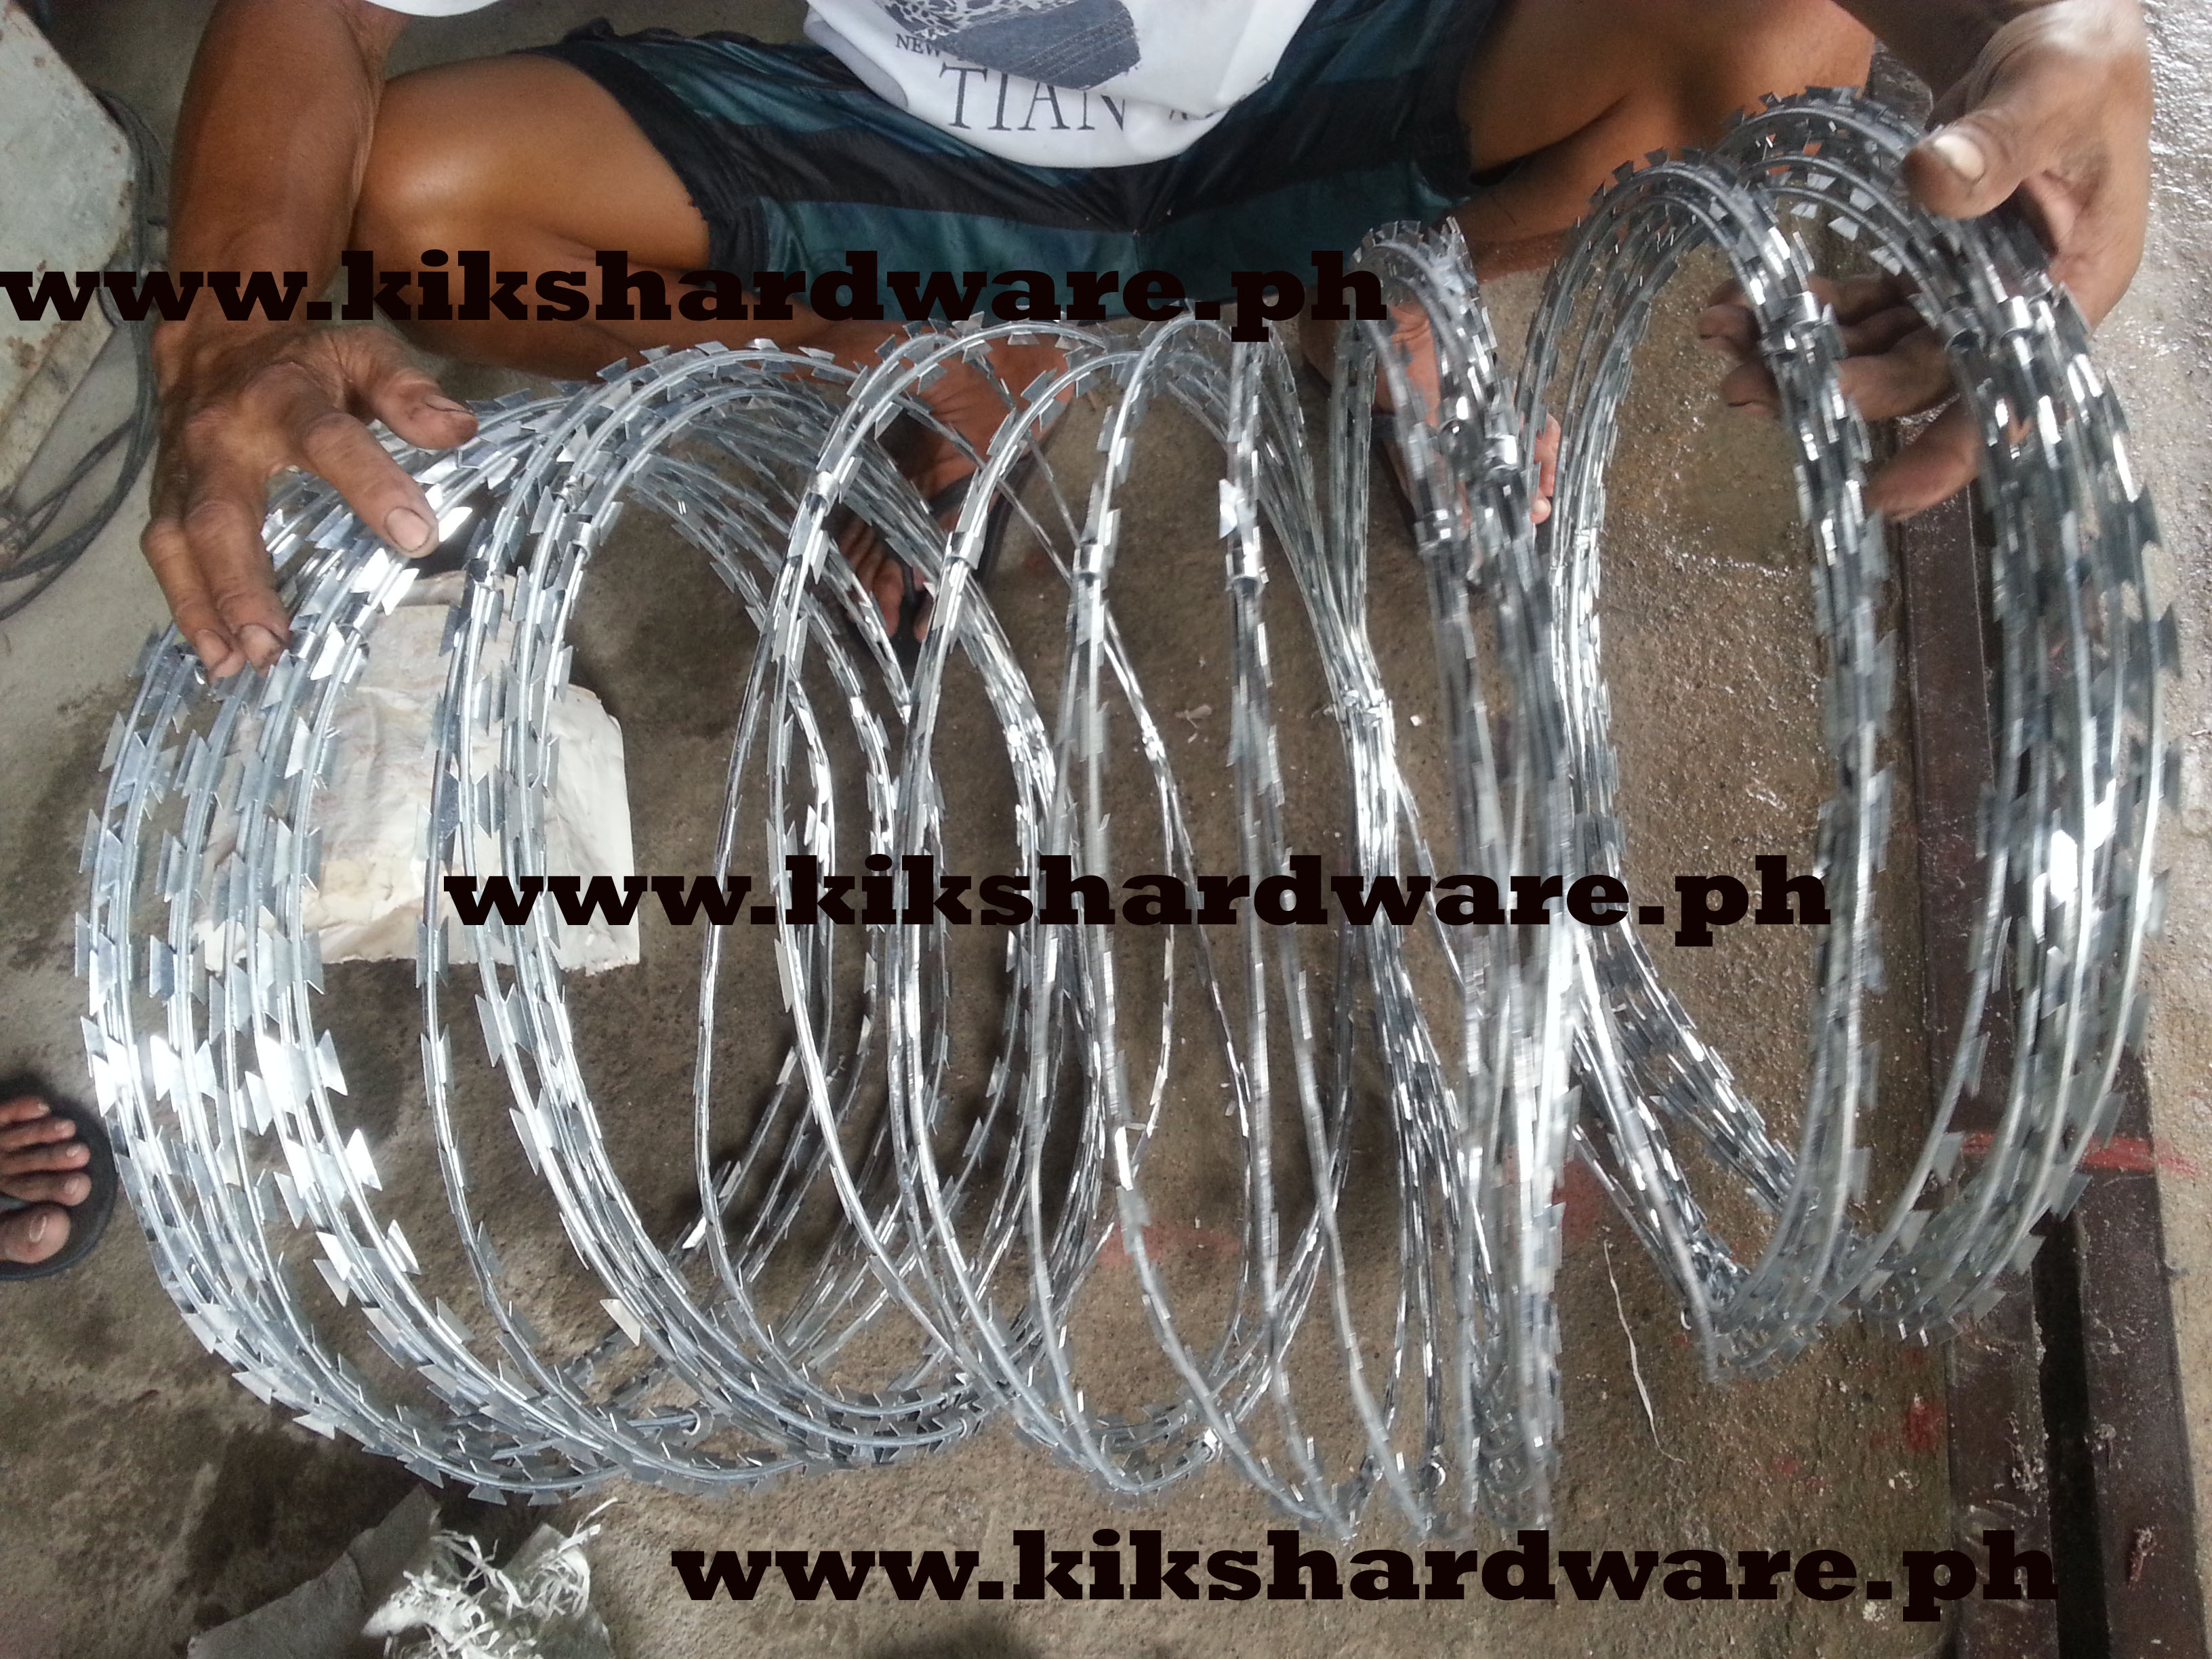 Razor Barbed Wire Philippines, Wholesale Various High Quality Razor Barbed Wire Philippines Products from Global Razor Barbed Wire Philippines Suppliers